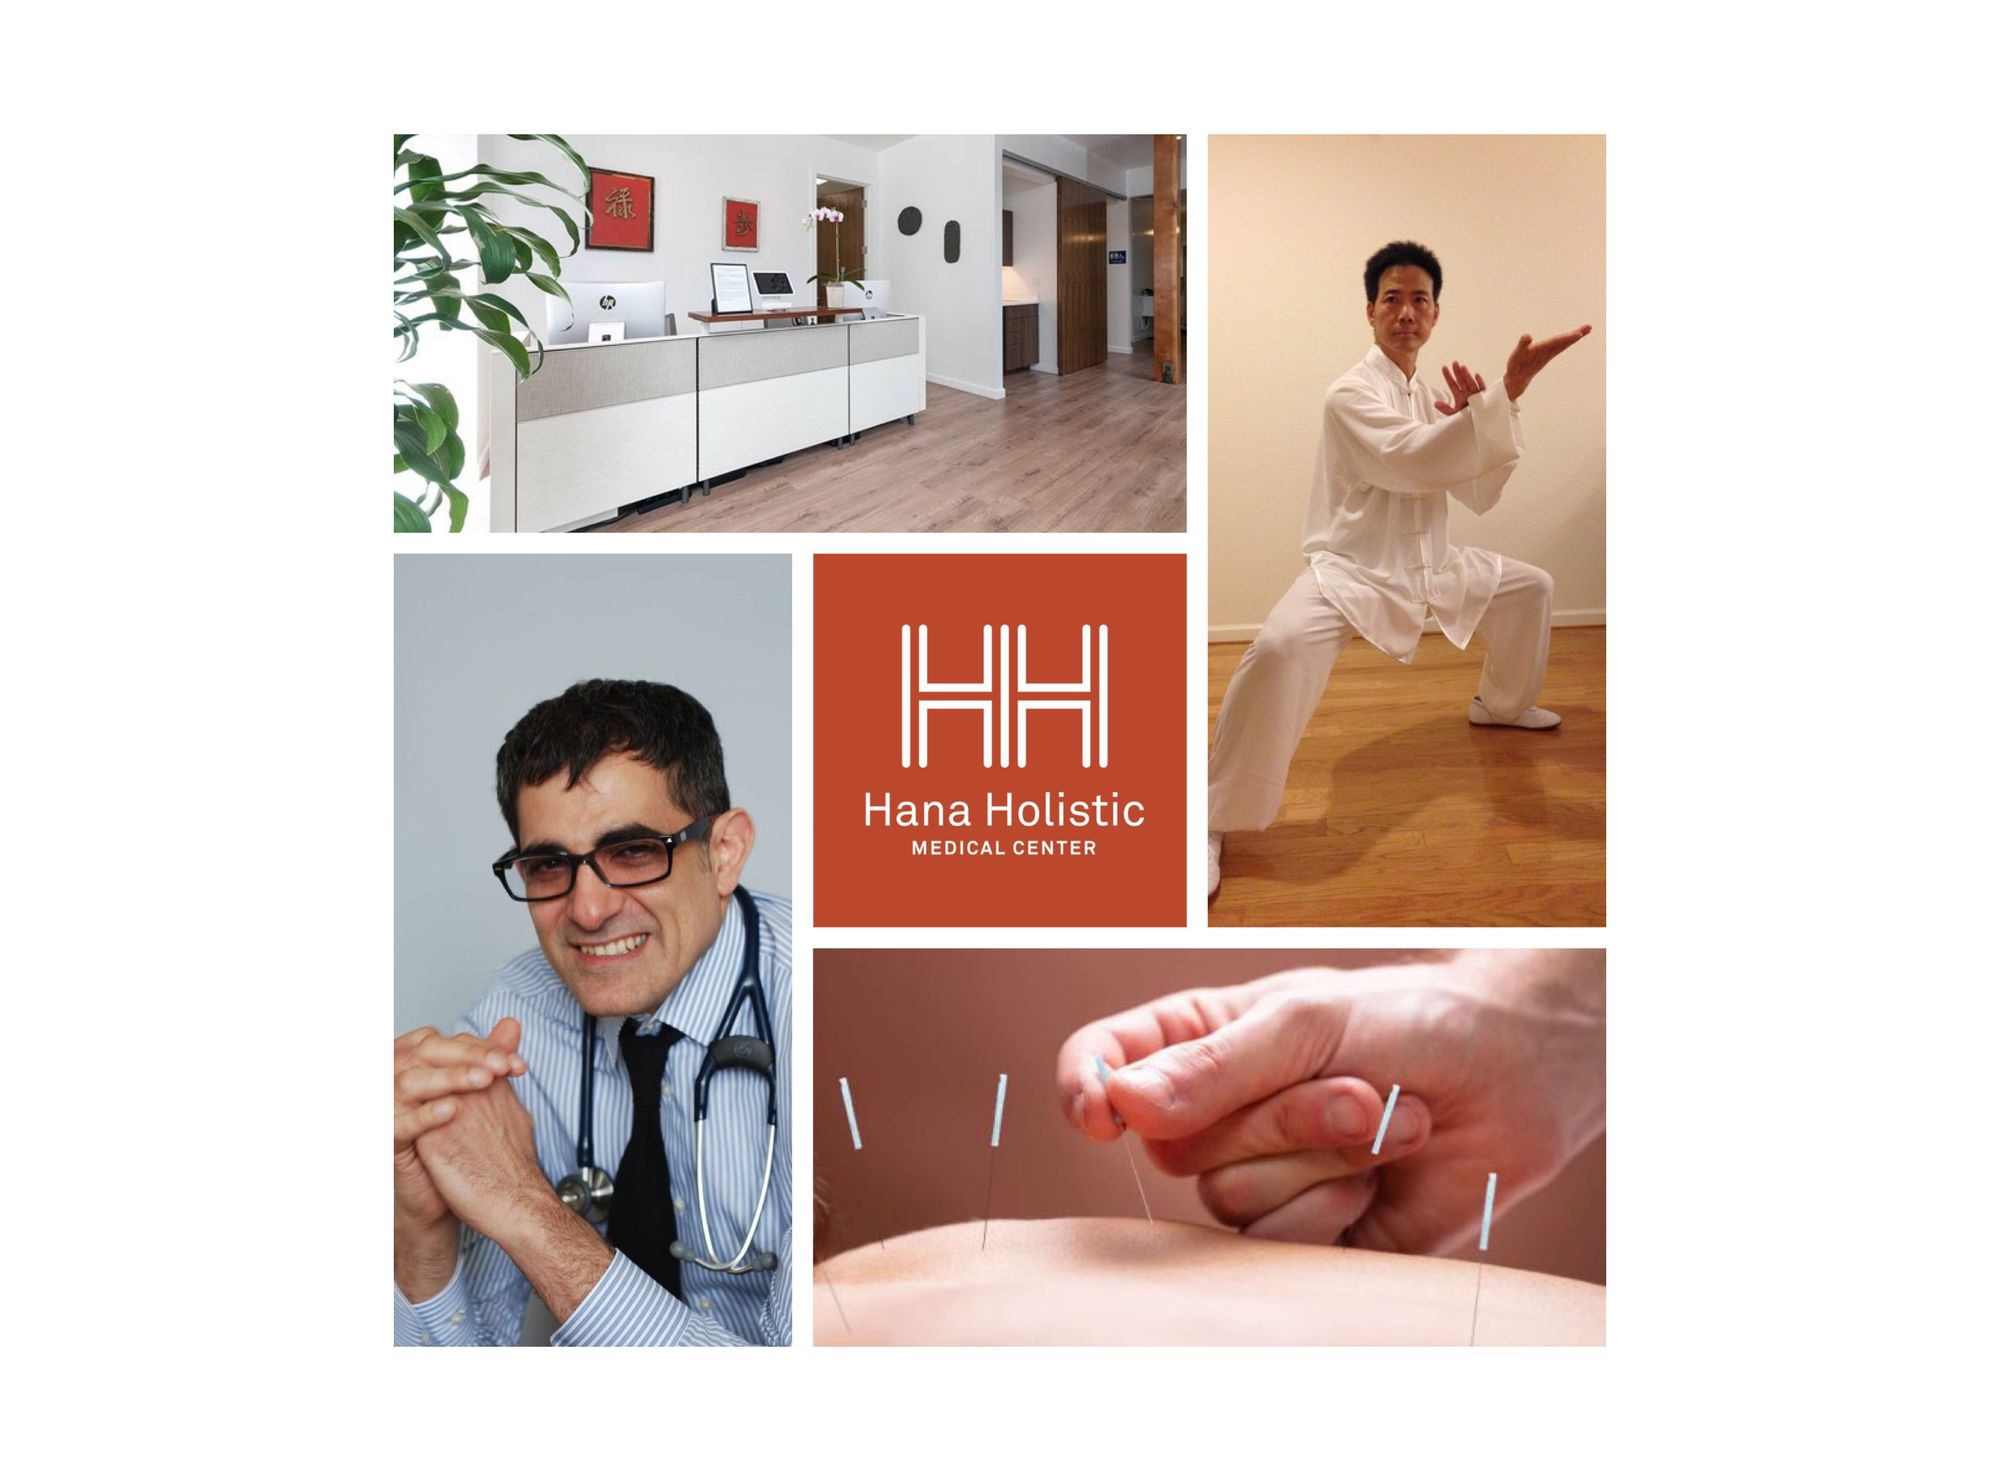 For a Better Health - Hana Holistic Medical Center